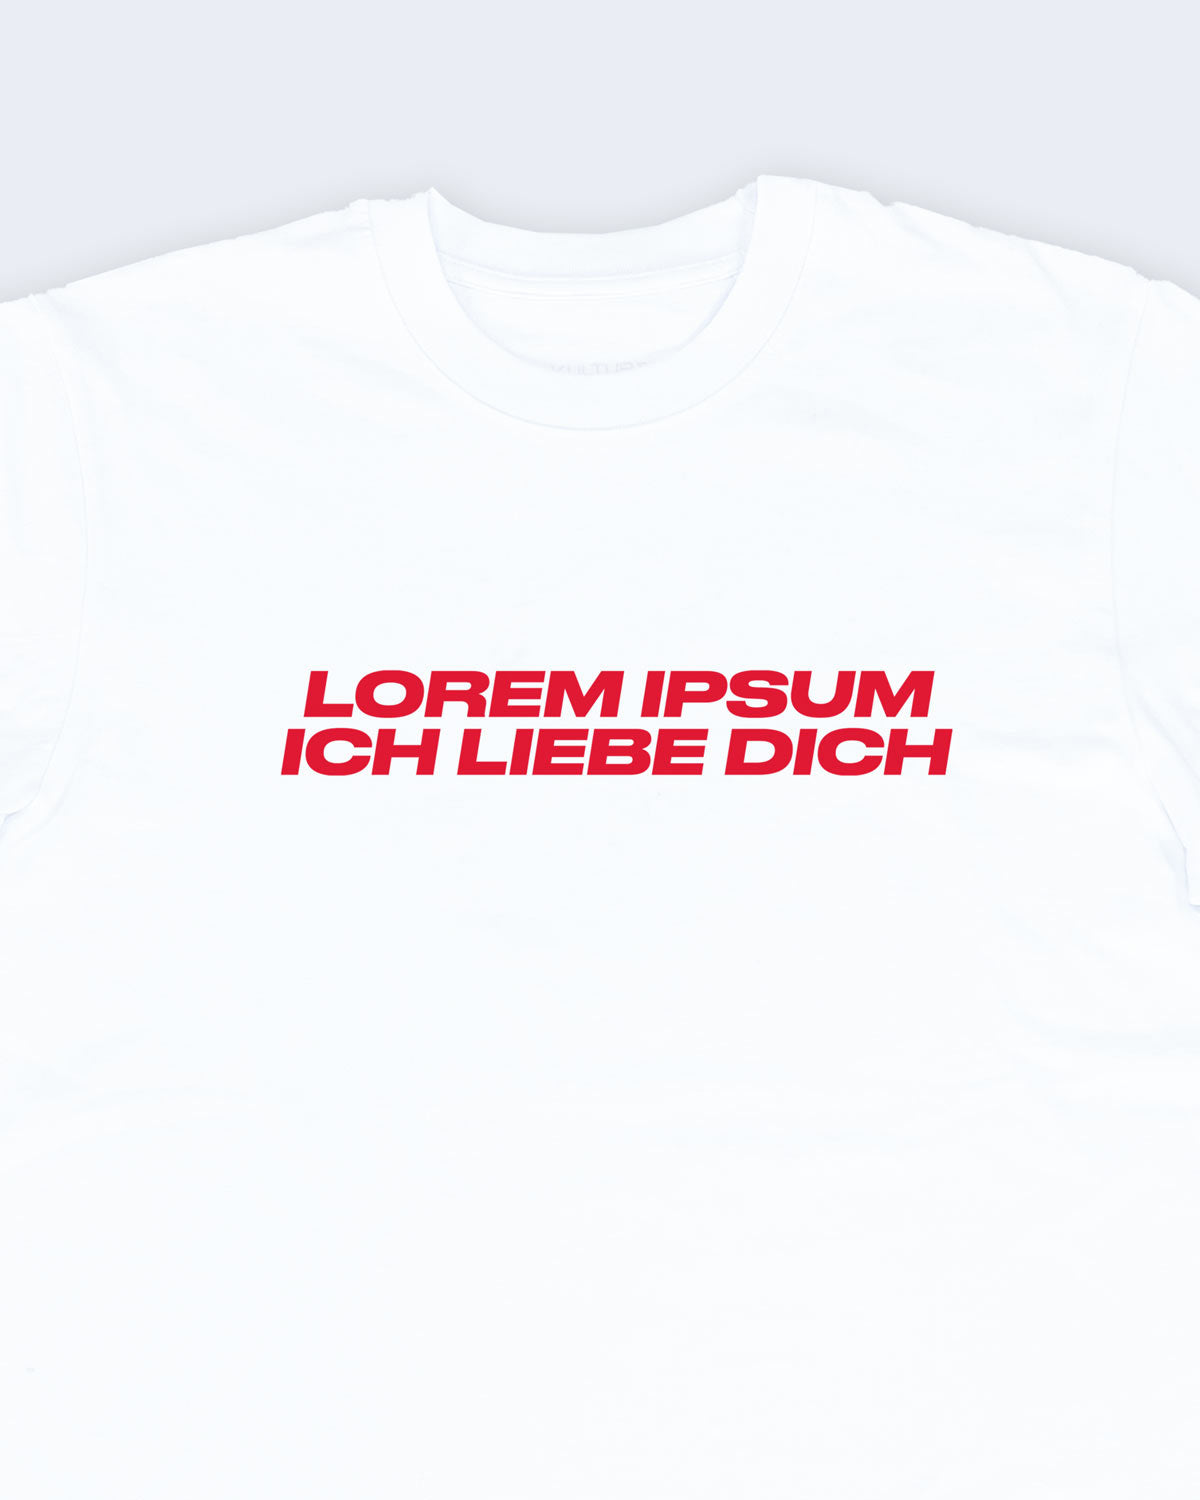 LOREM IPSUM ILB 2024 Shirt by KUGU Studio